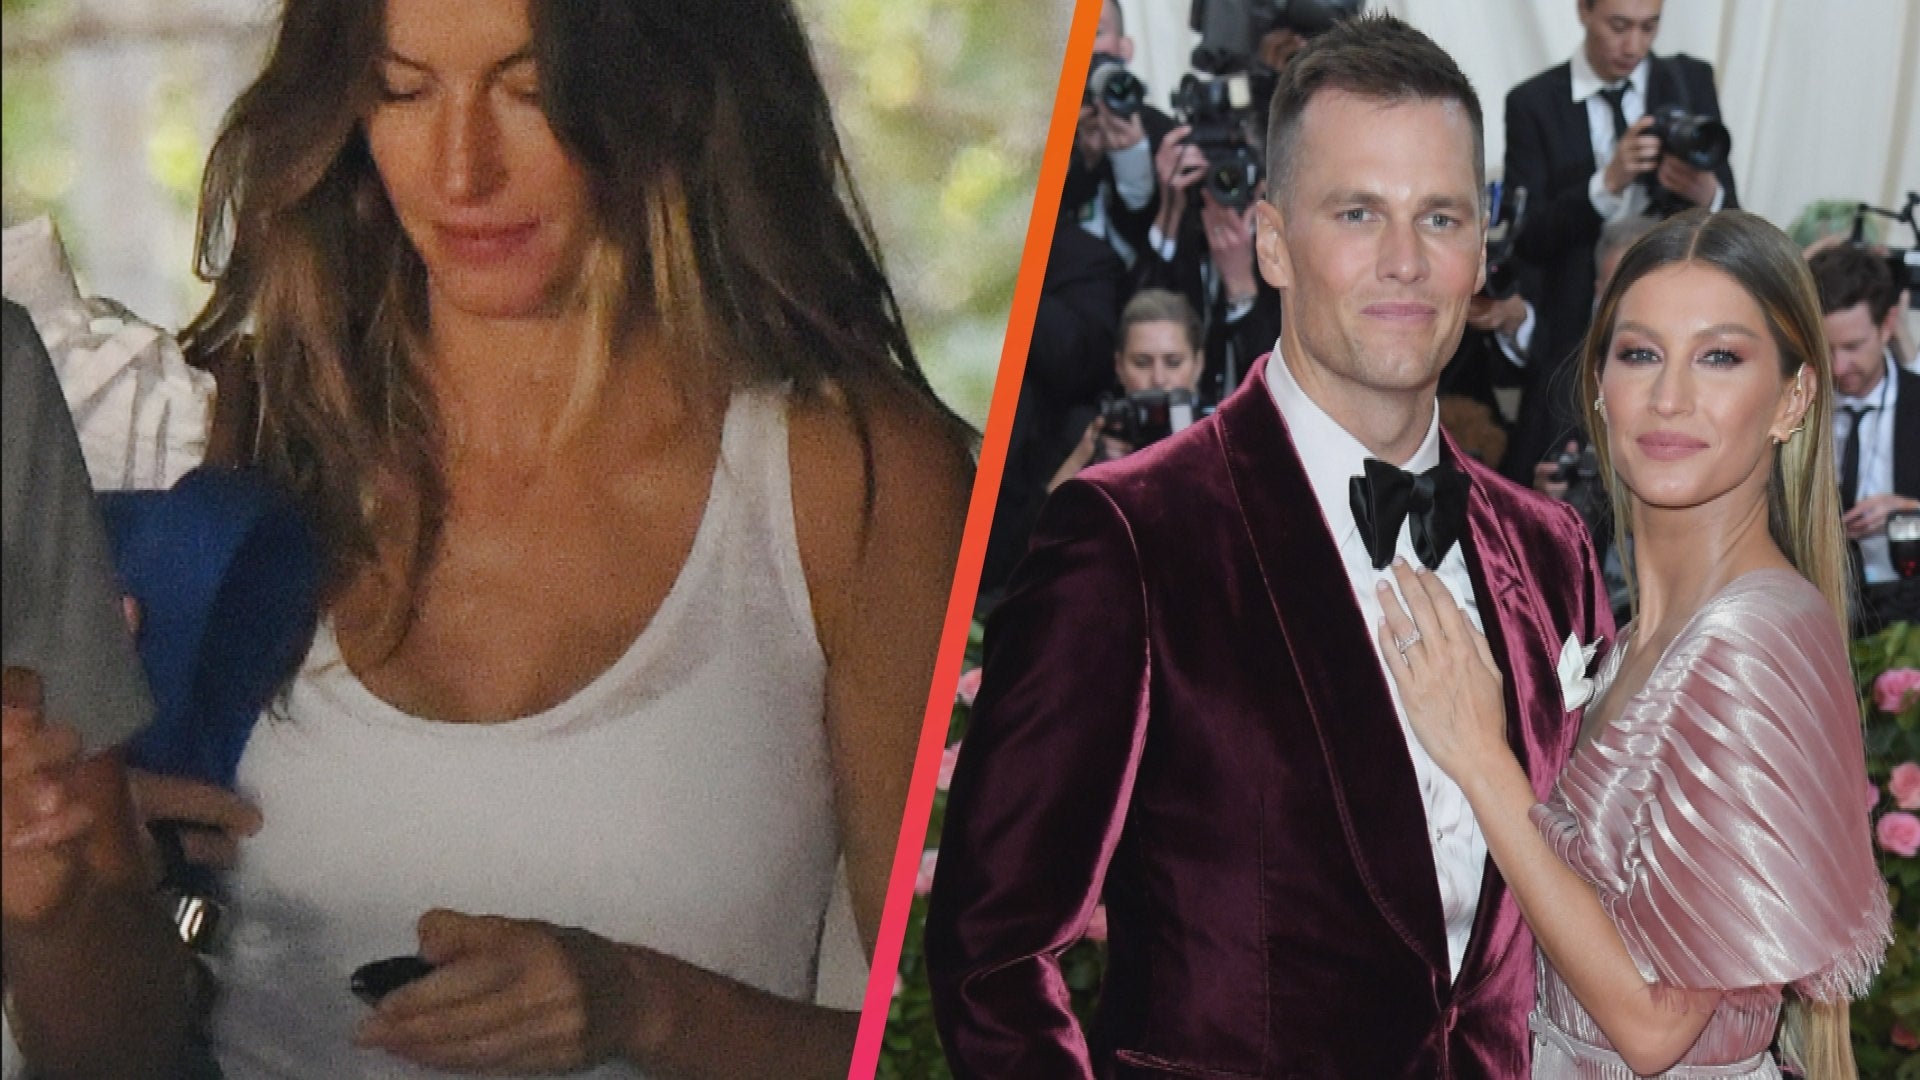 Gisele Bündchen Ditches Wedding Ring as Tom Brady Divorce Rumors Swirl